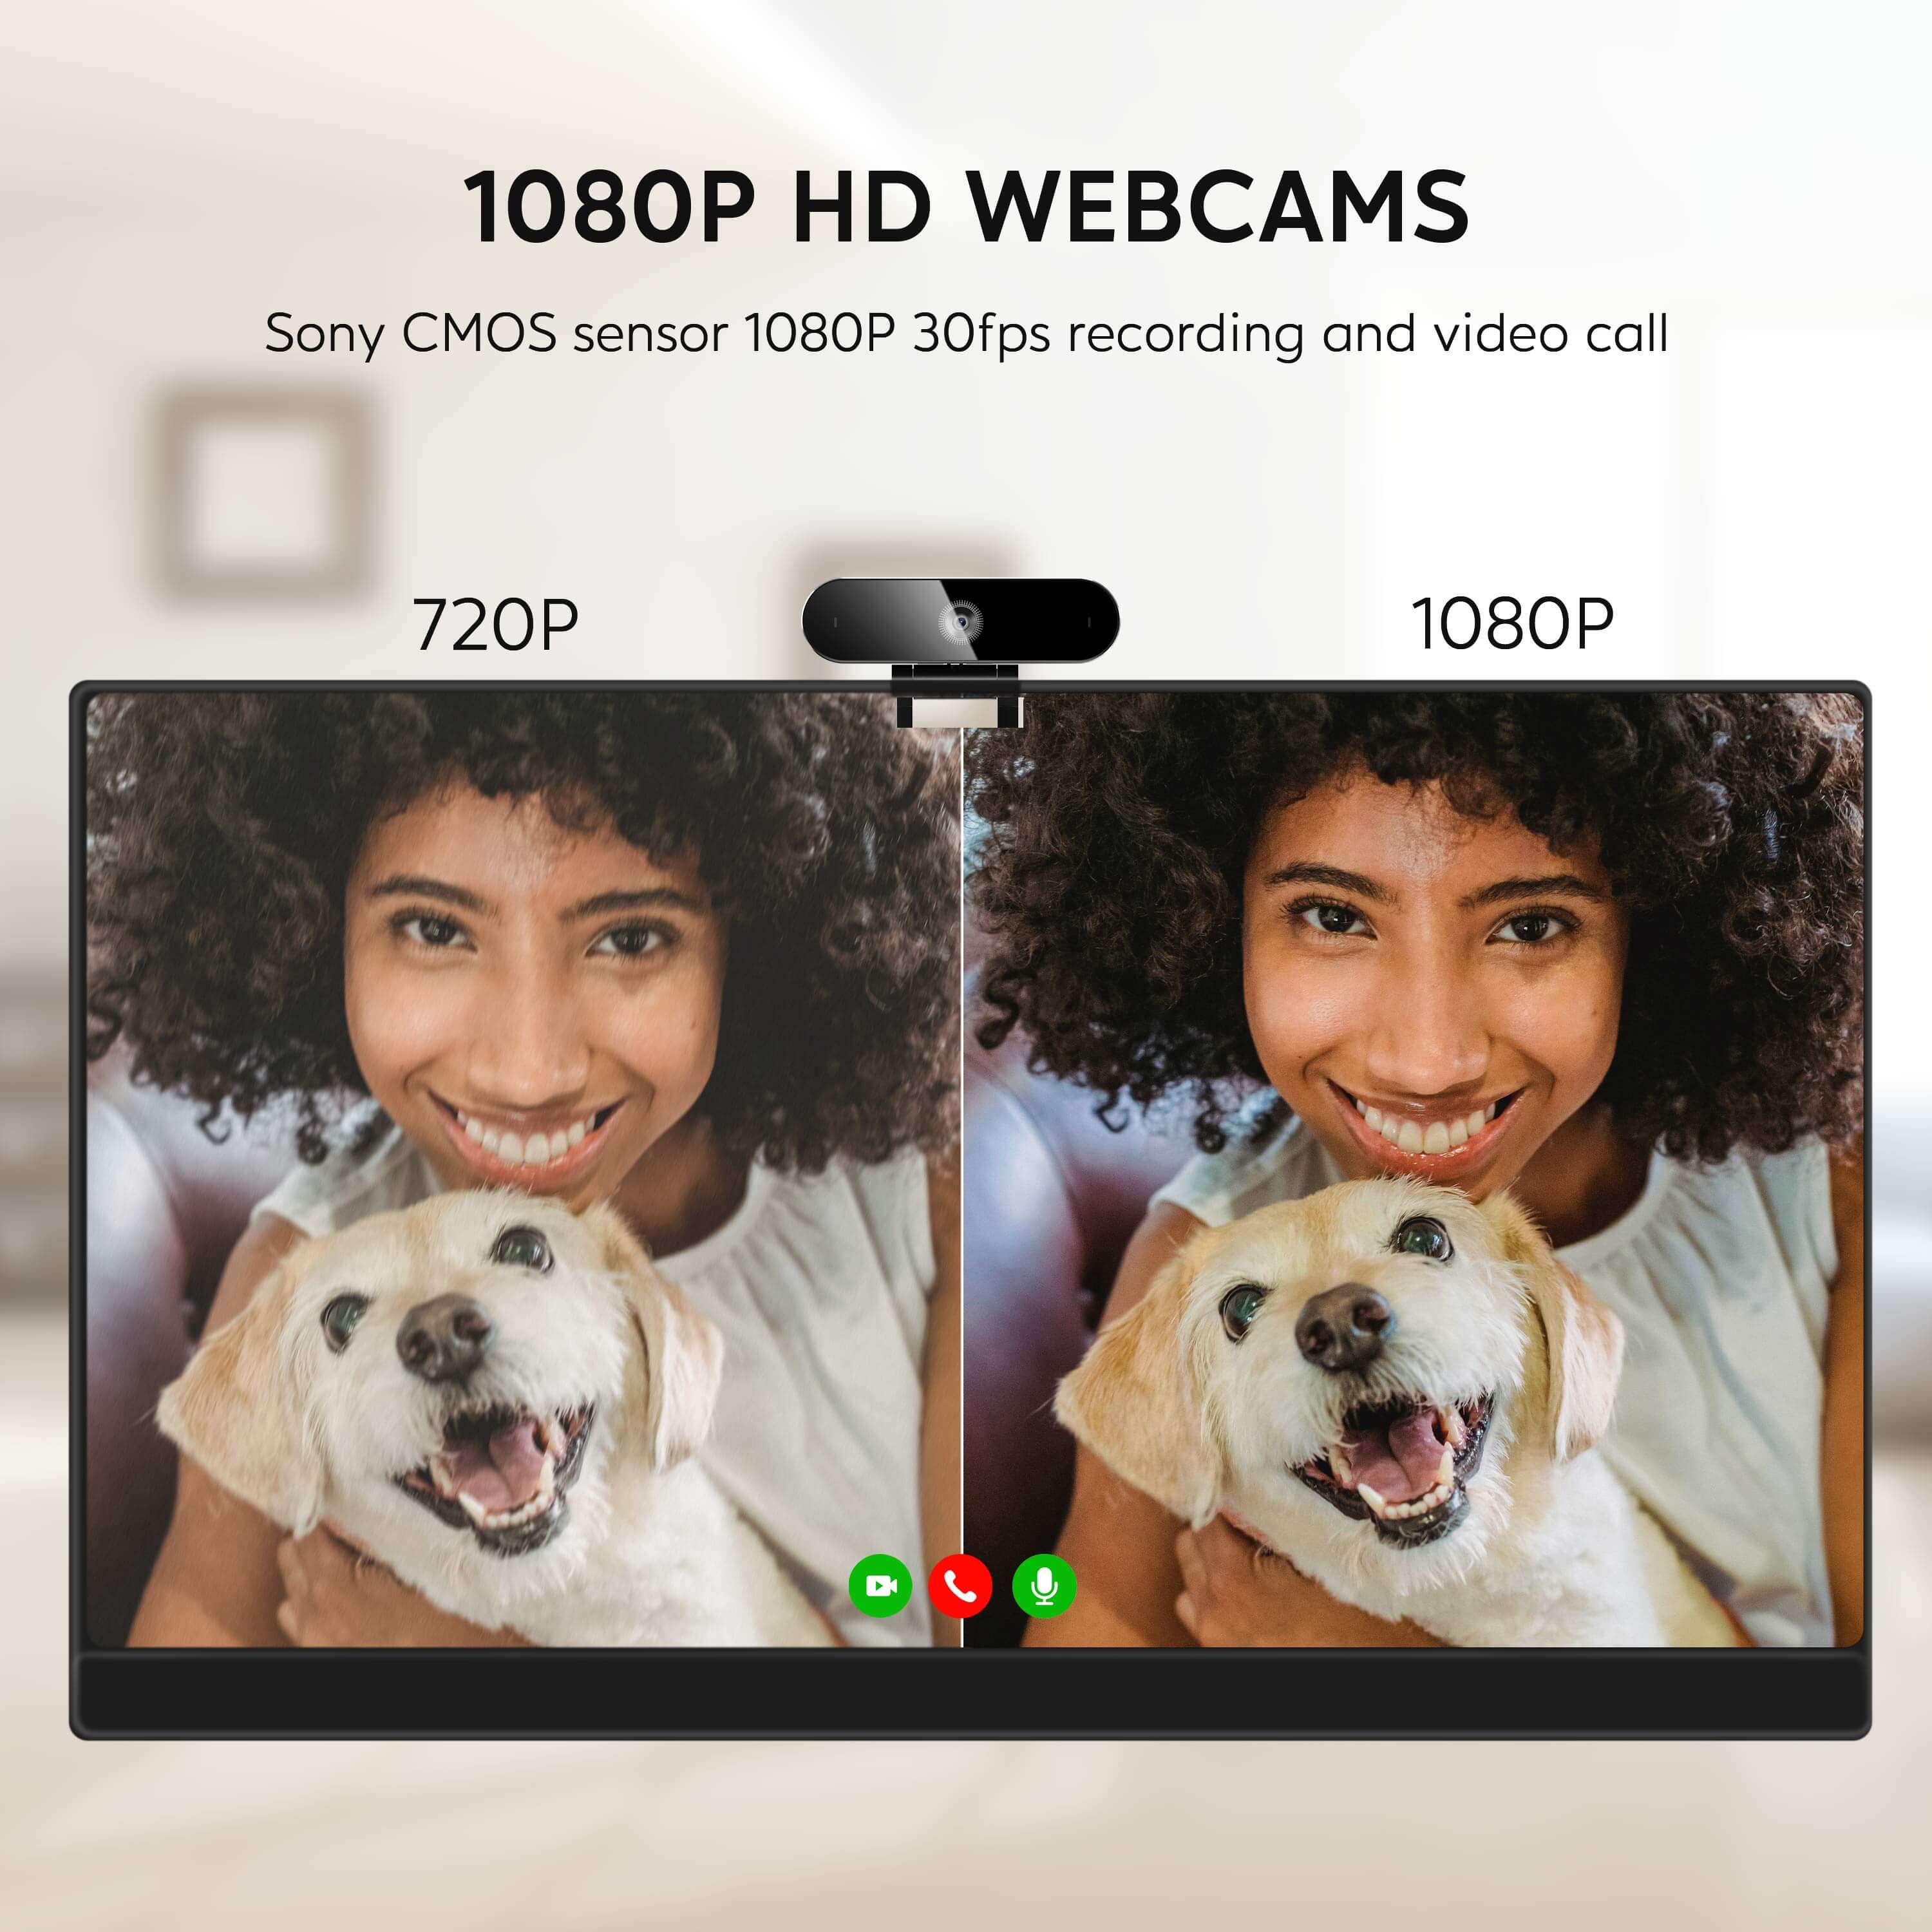 1080p hd webcam with CMOS sensor 30fps recording